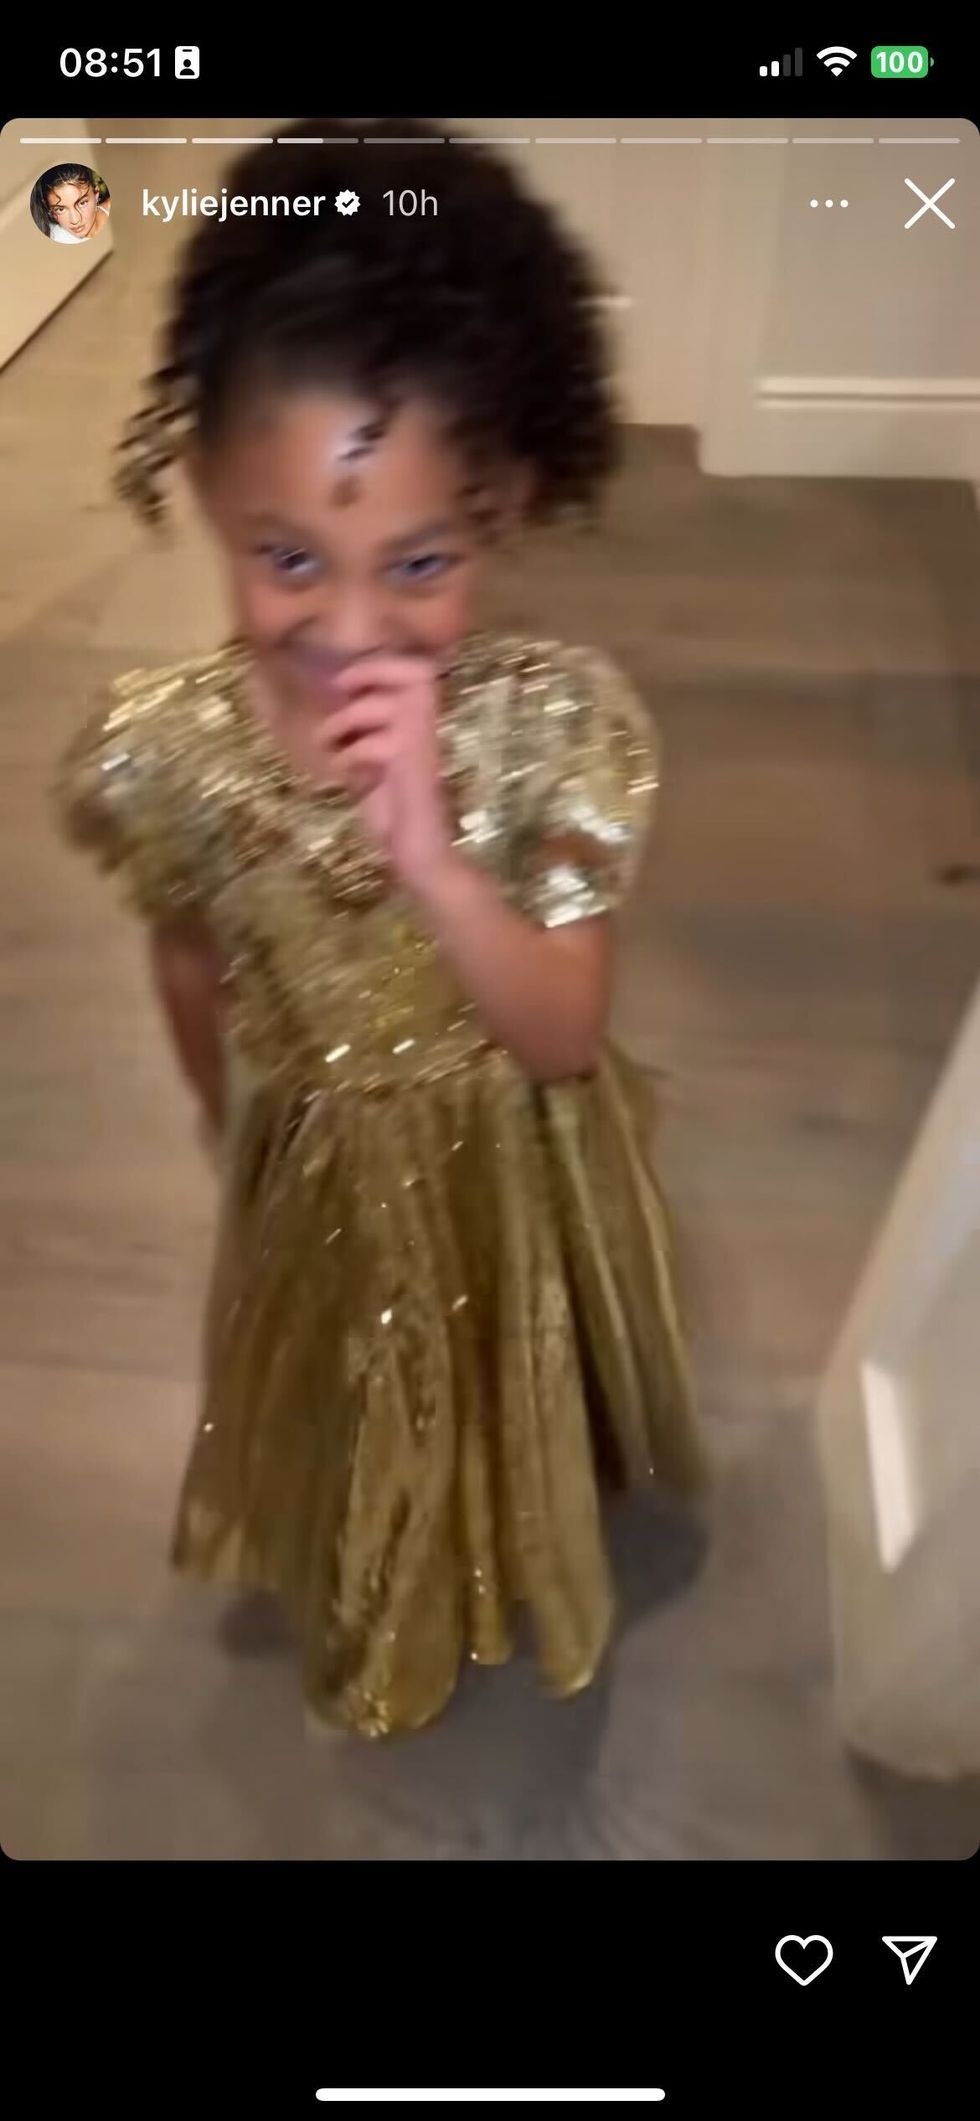 a child wearing a gold dress